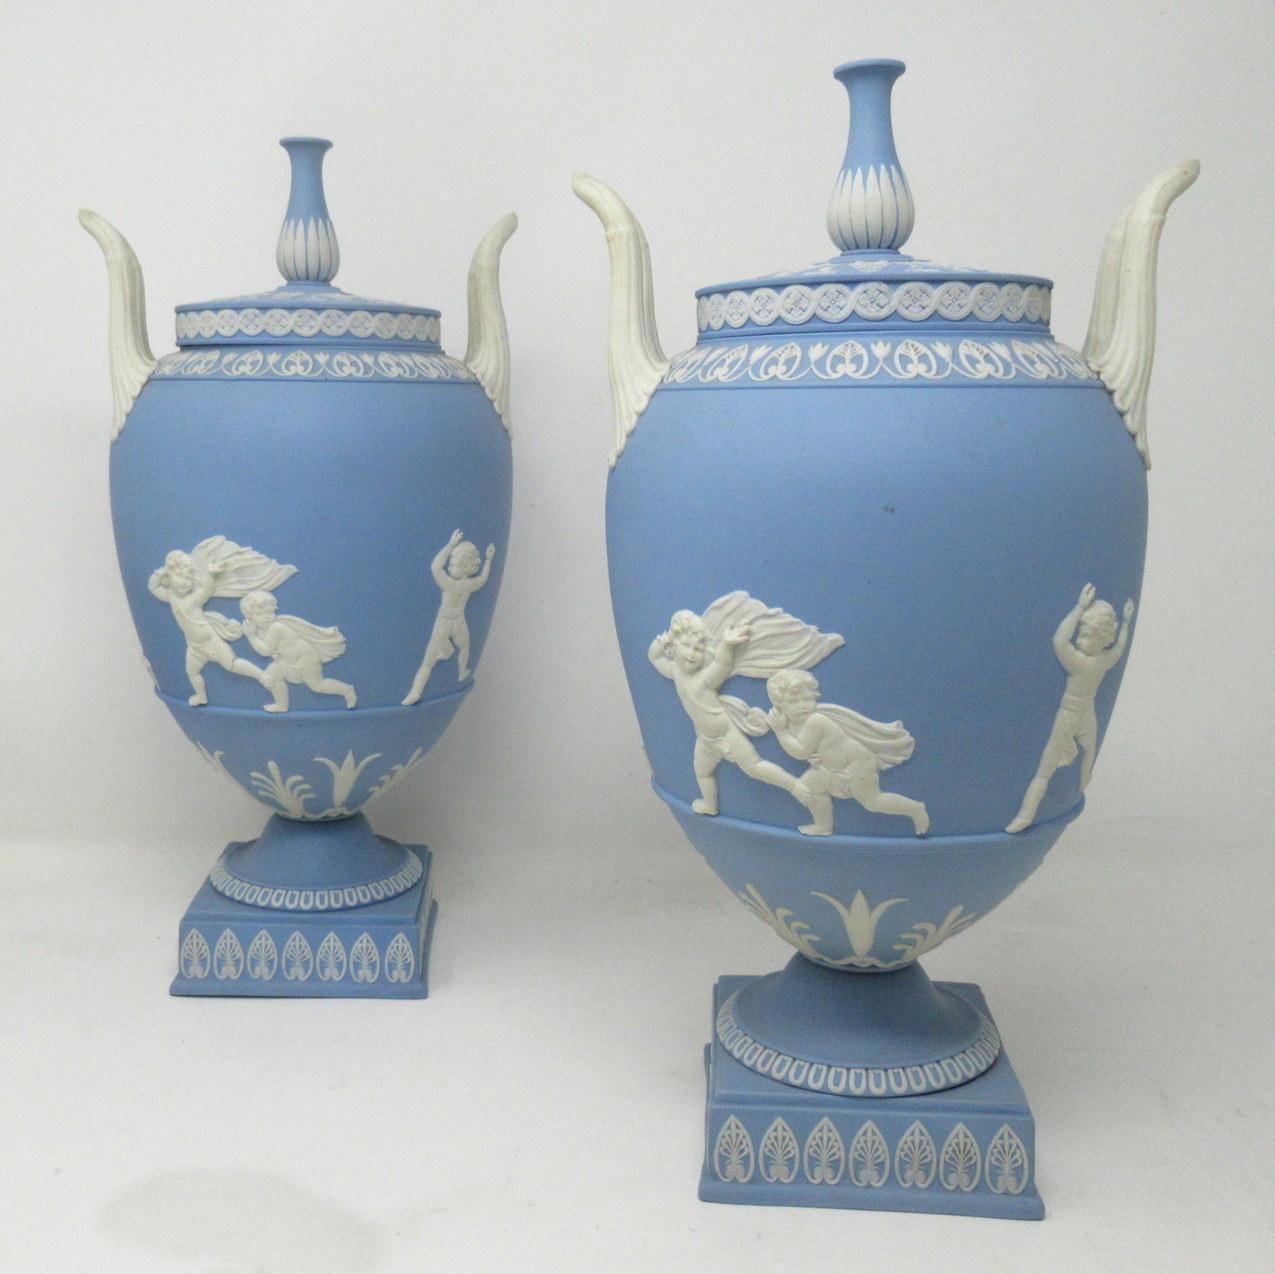 Néoclassique Antique Paire d'Urnes Céramique Bleue Wedgwood Jasperware Vases John Flaxman Cherubs